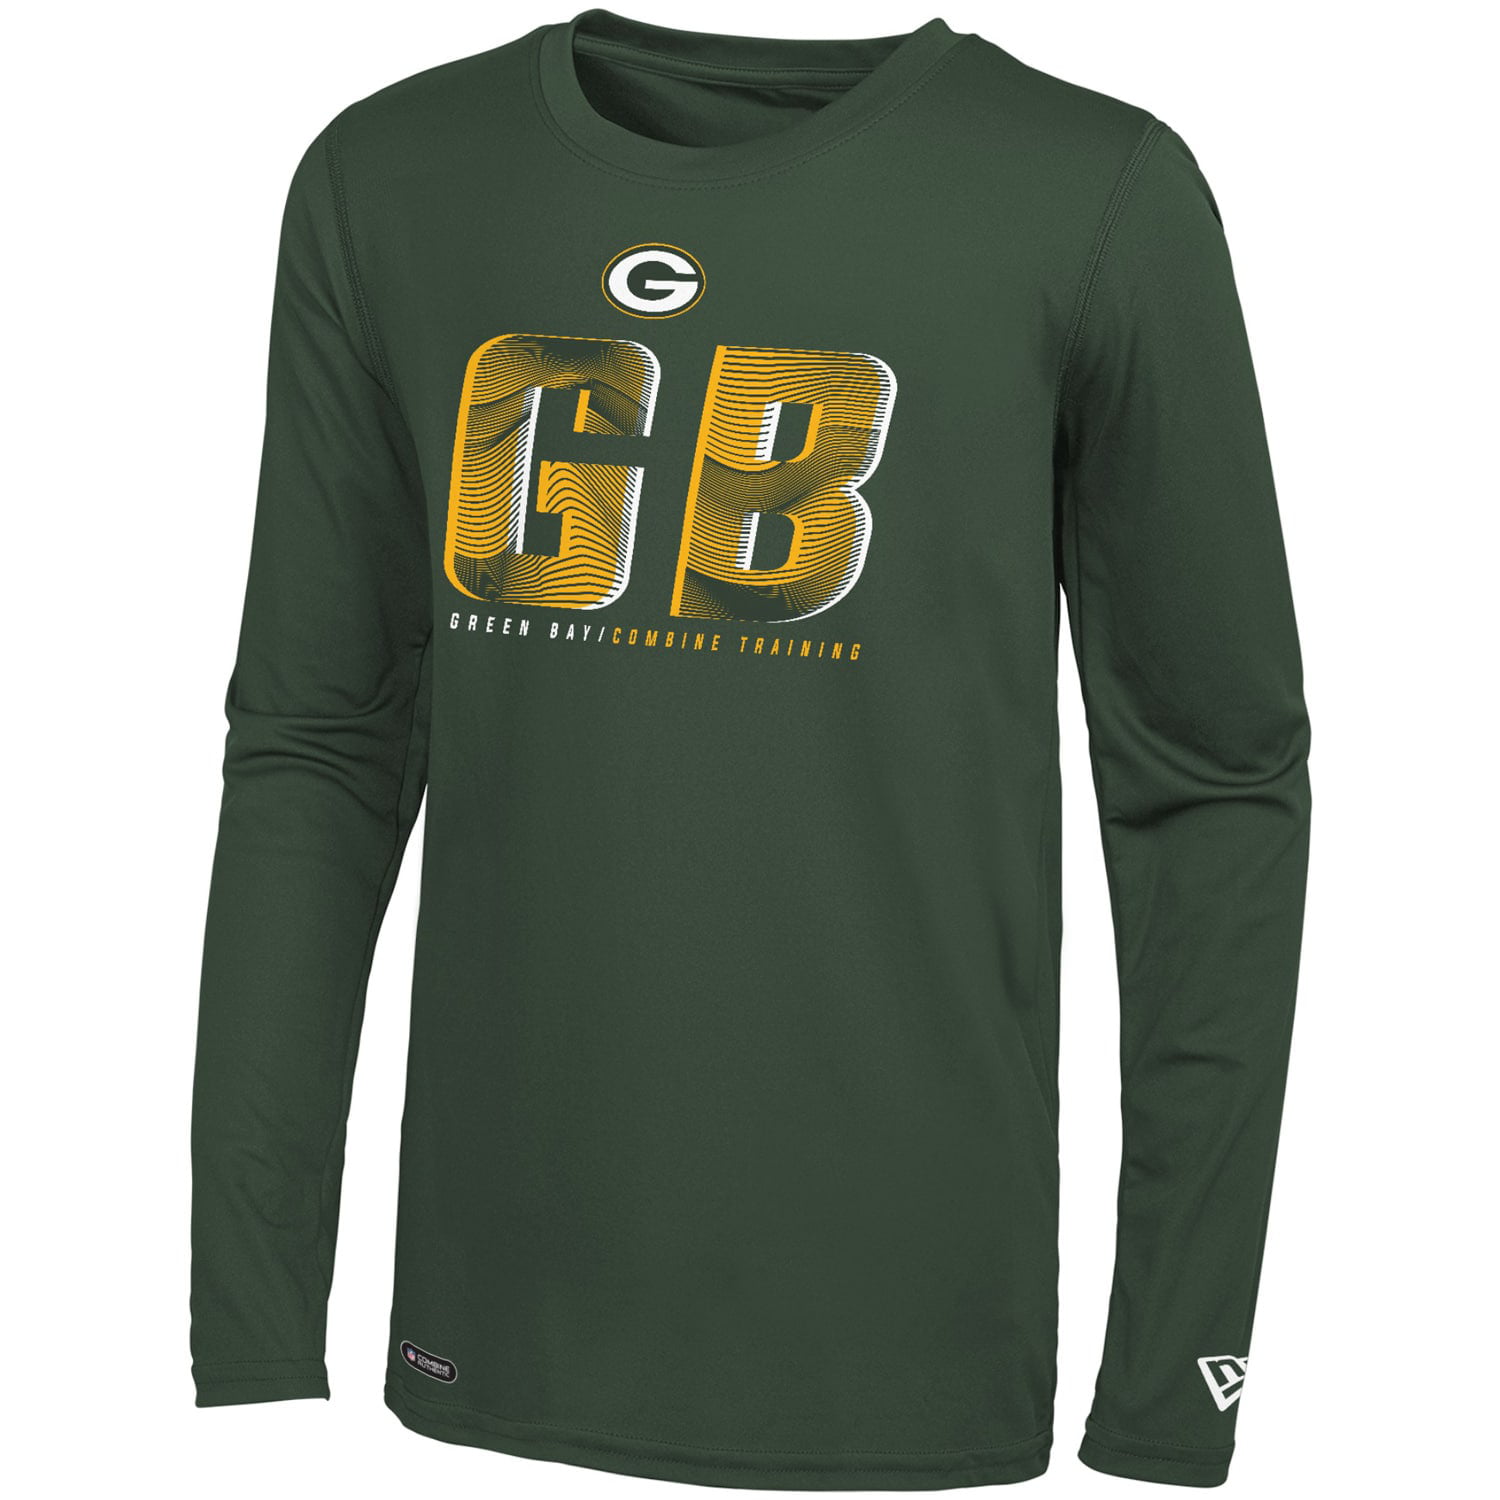 Men's New Era Raglan Green Bay Packers Crew Neck Cotton T-Shirt in Grey